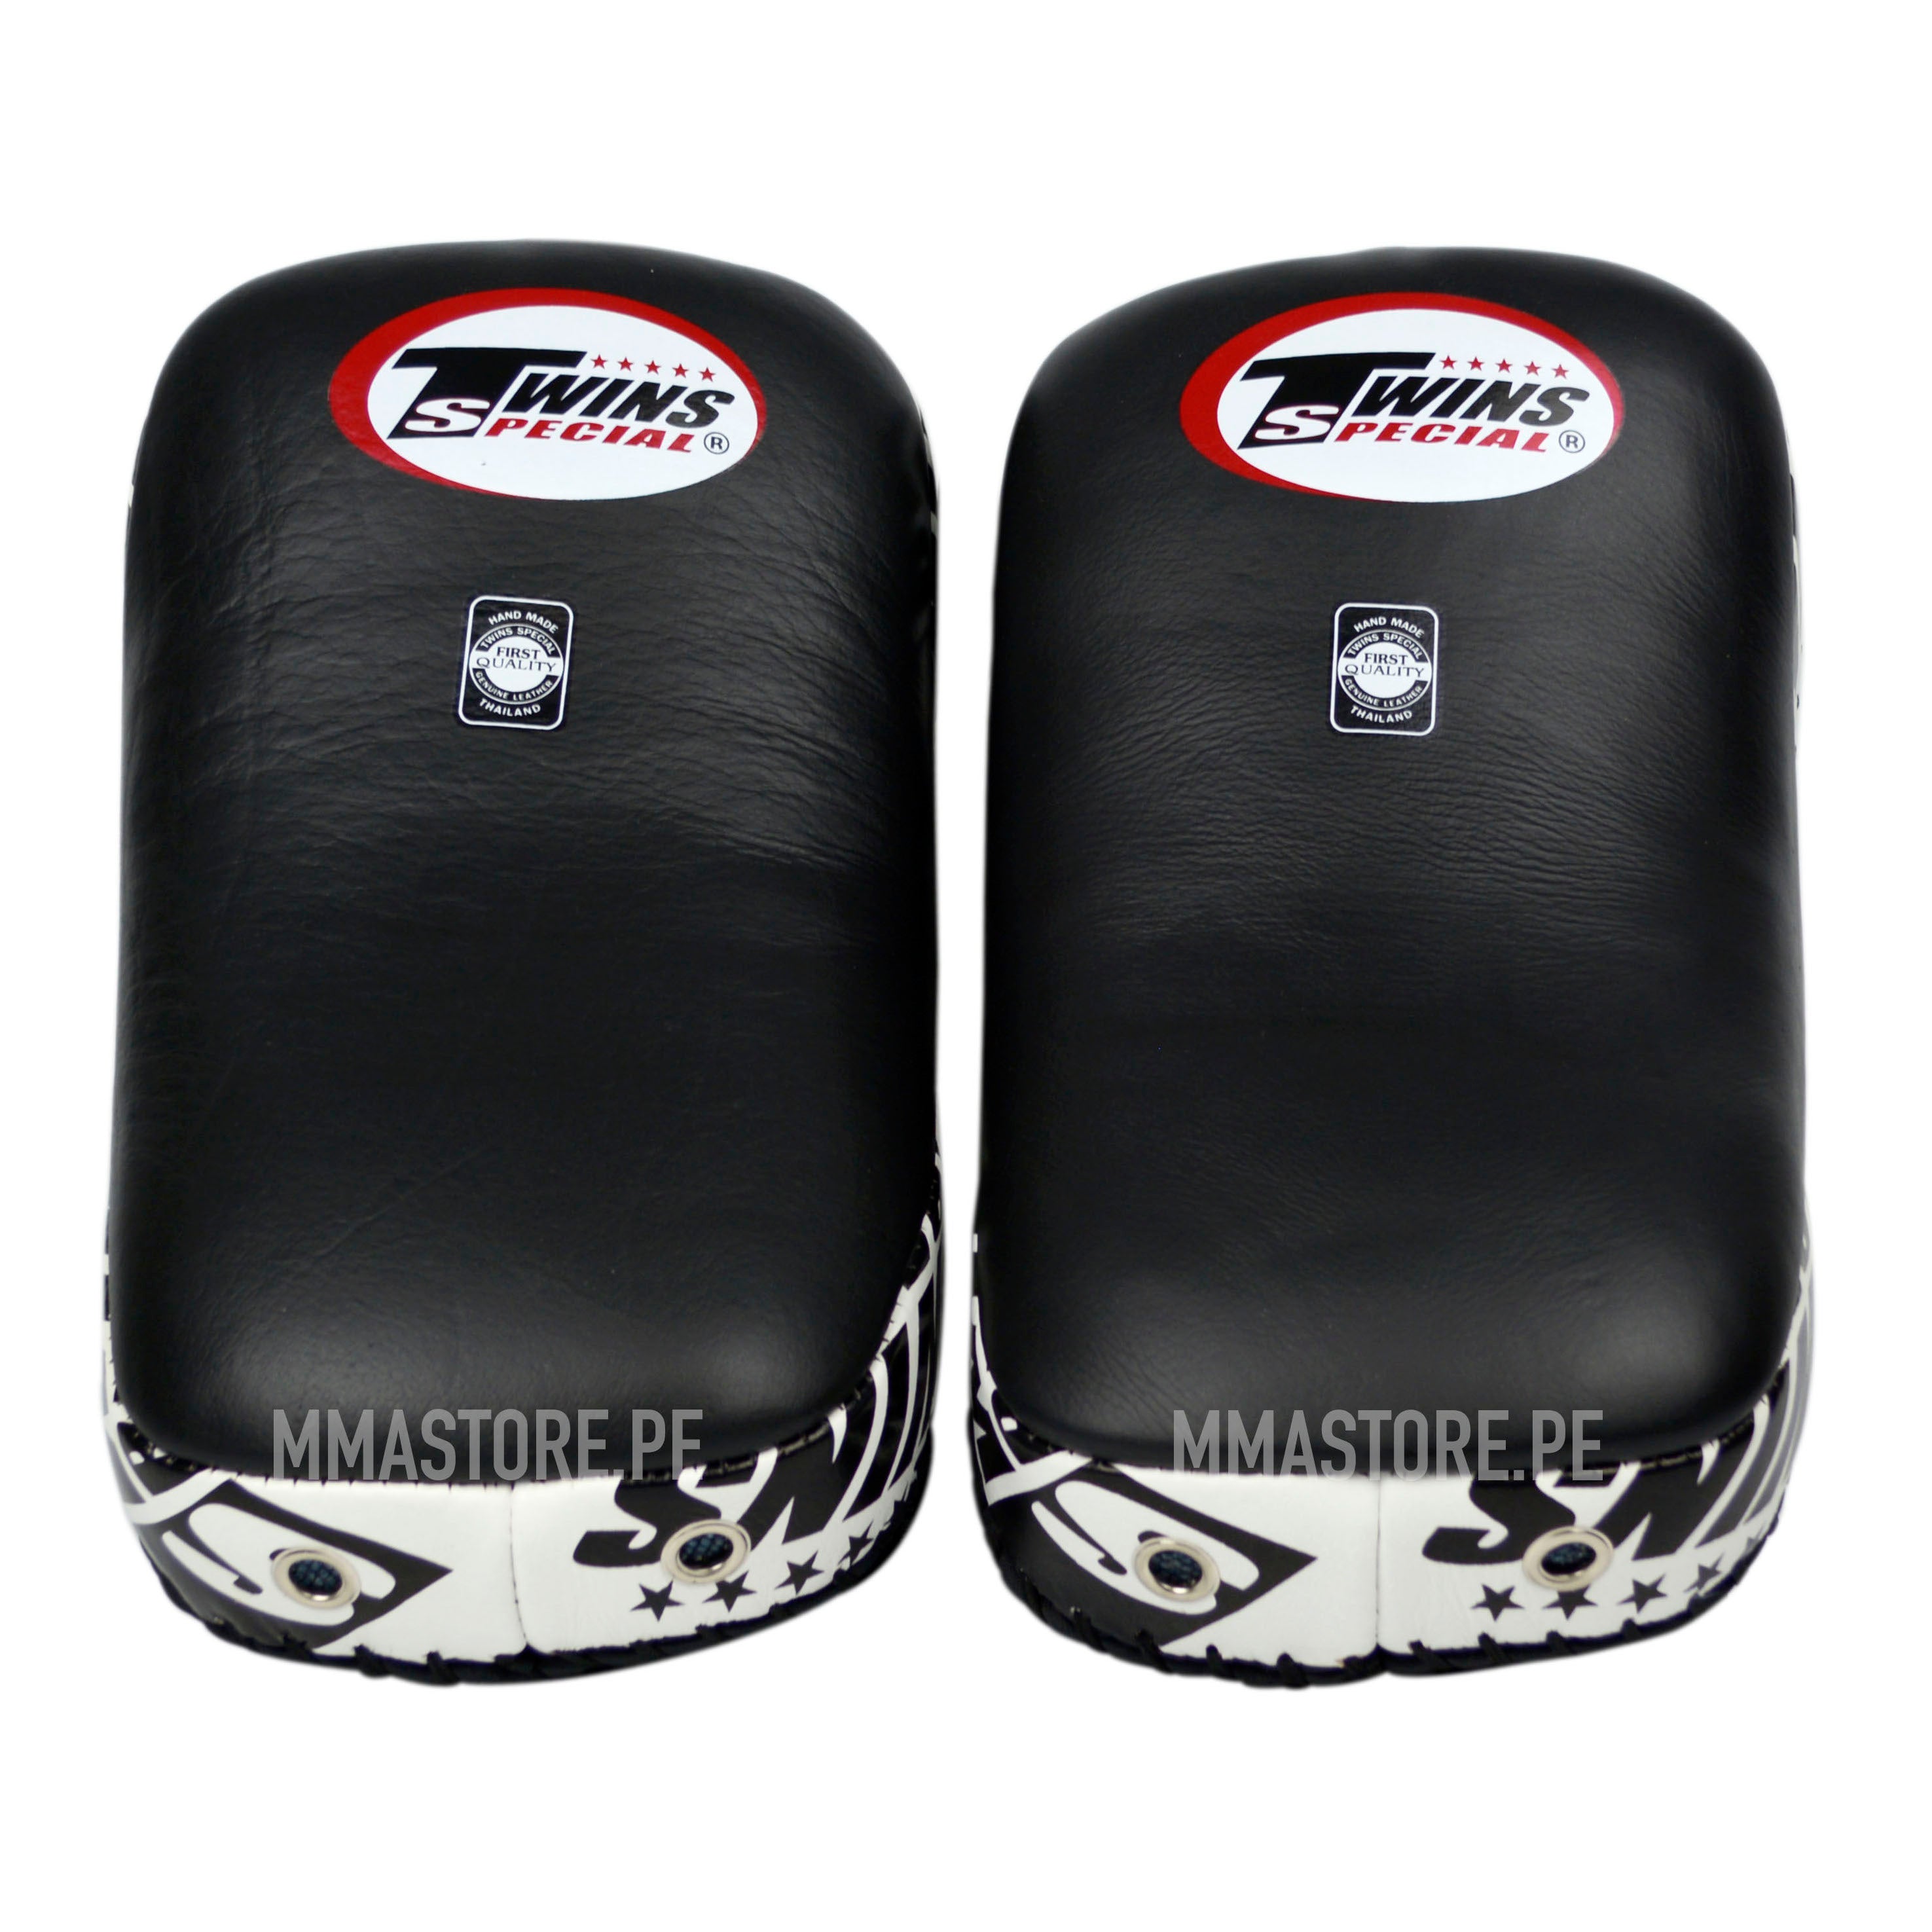 Kicking Pads Twins Special Muay Thai - Negro - 100% Cuero - Tamaño Standard - MMA Store Peru